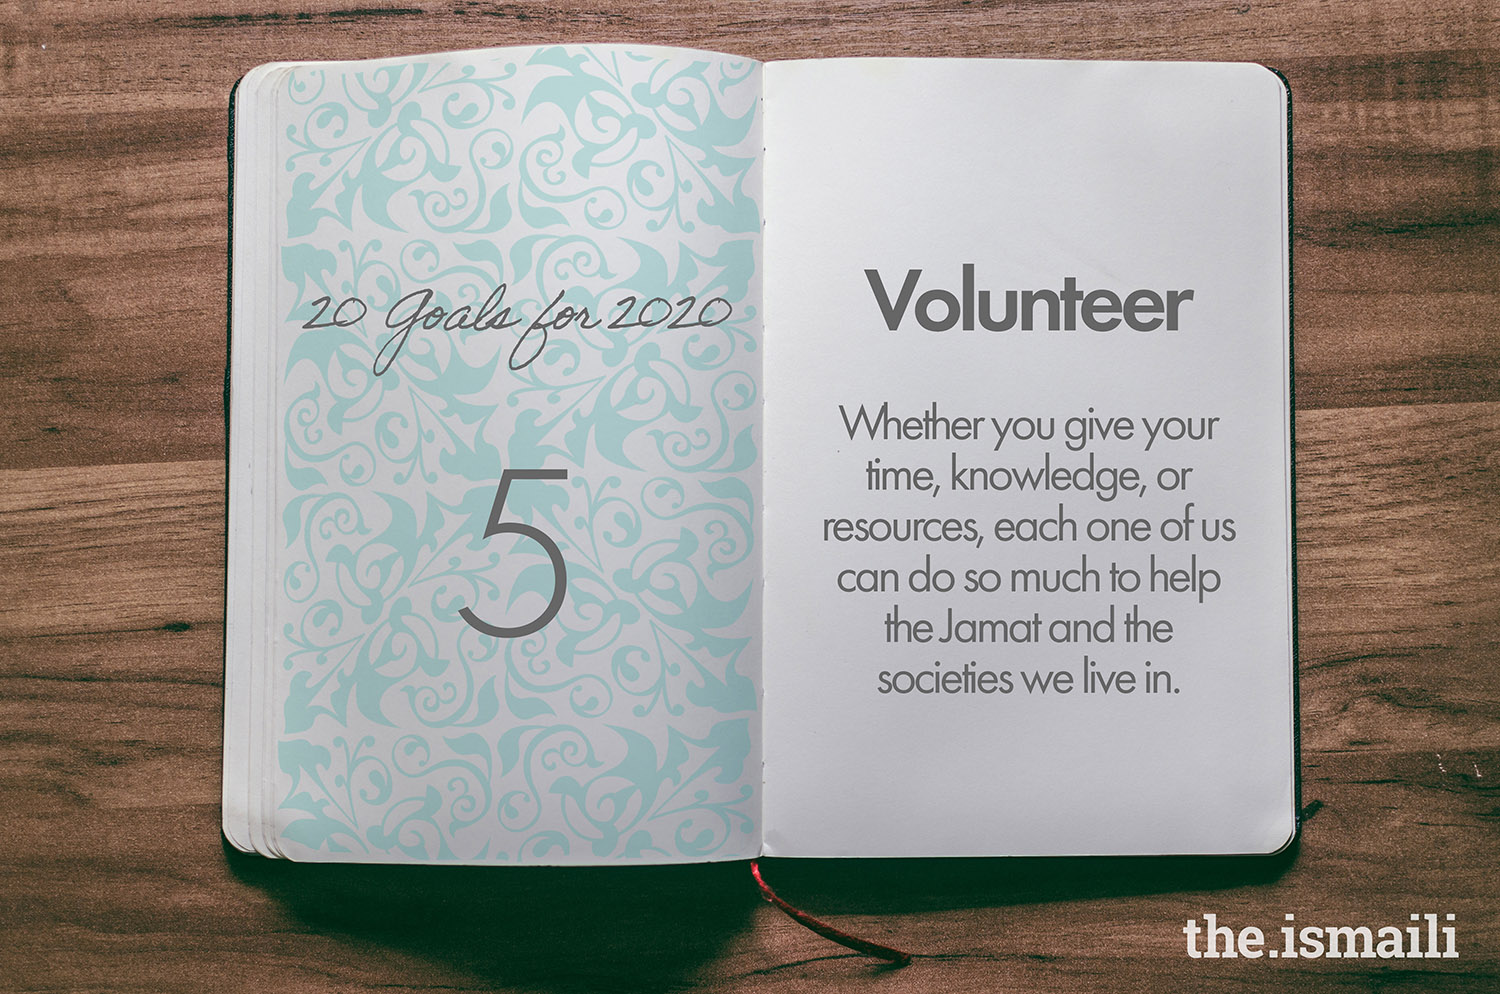 Goal 5: Volunteer